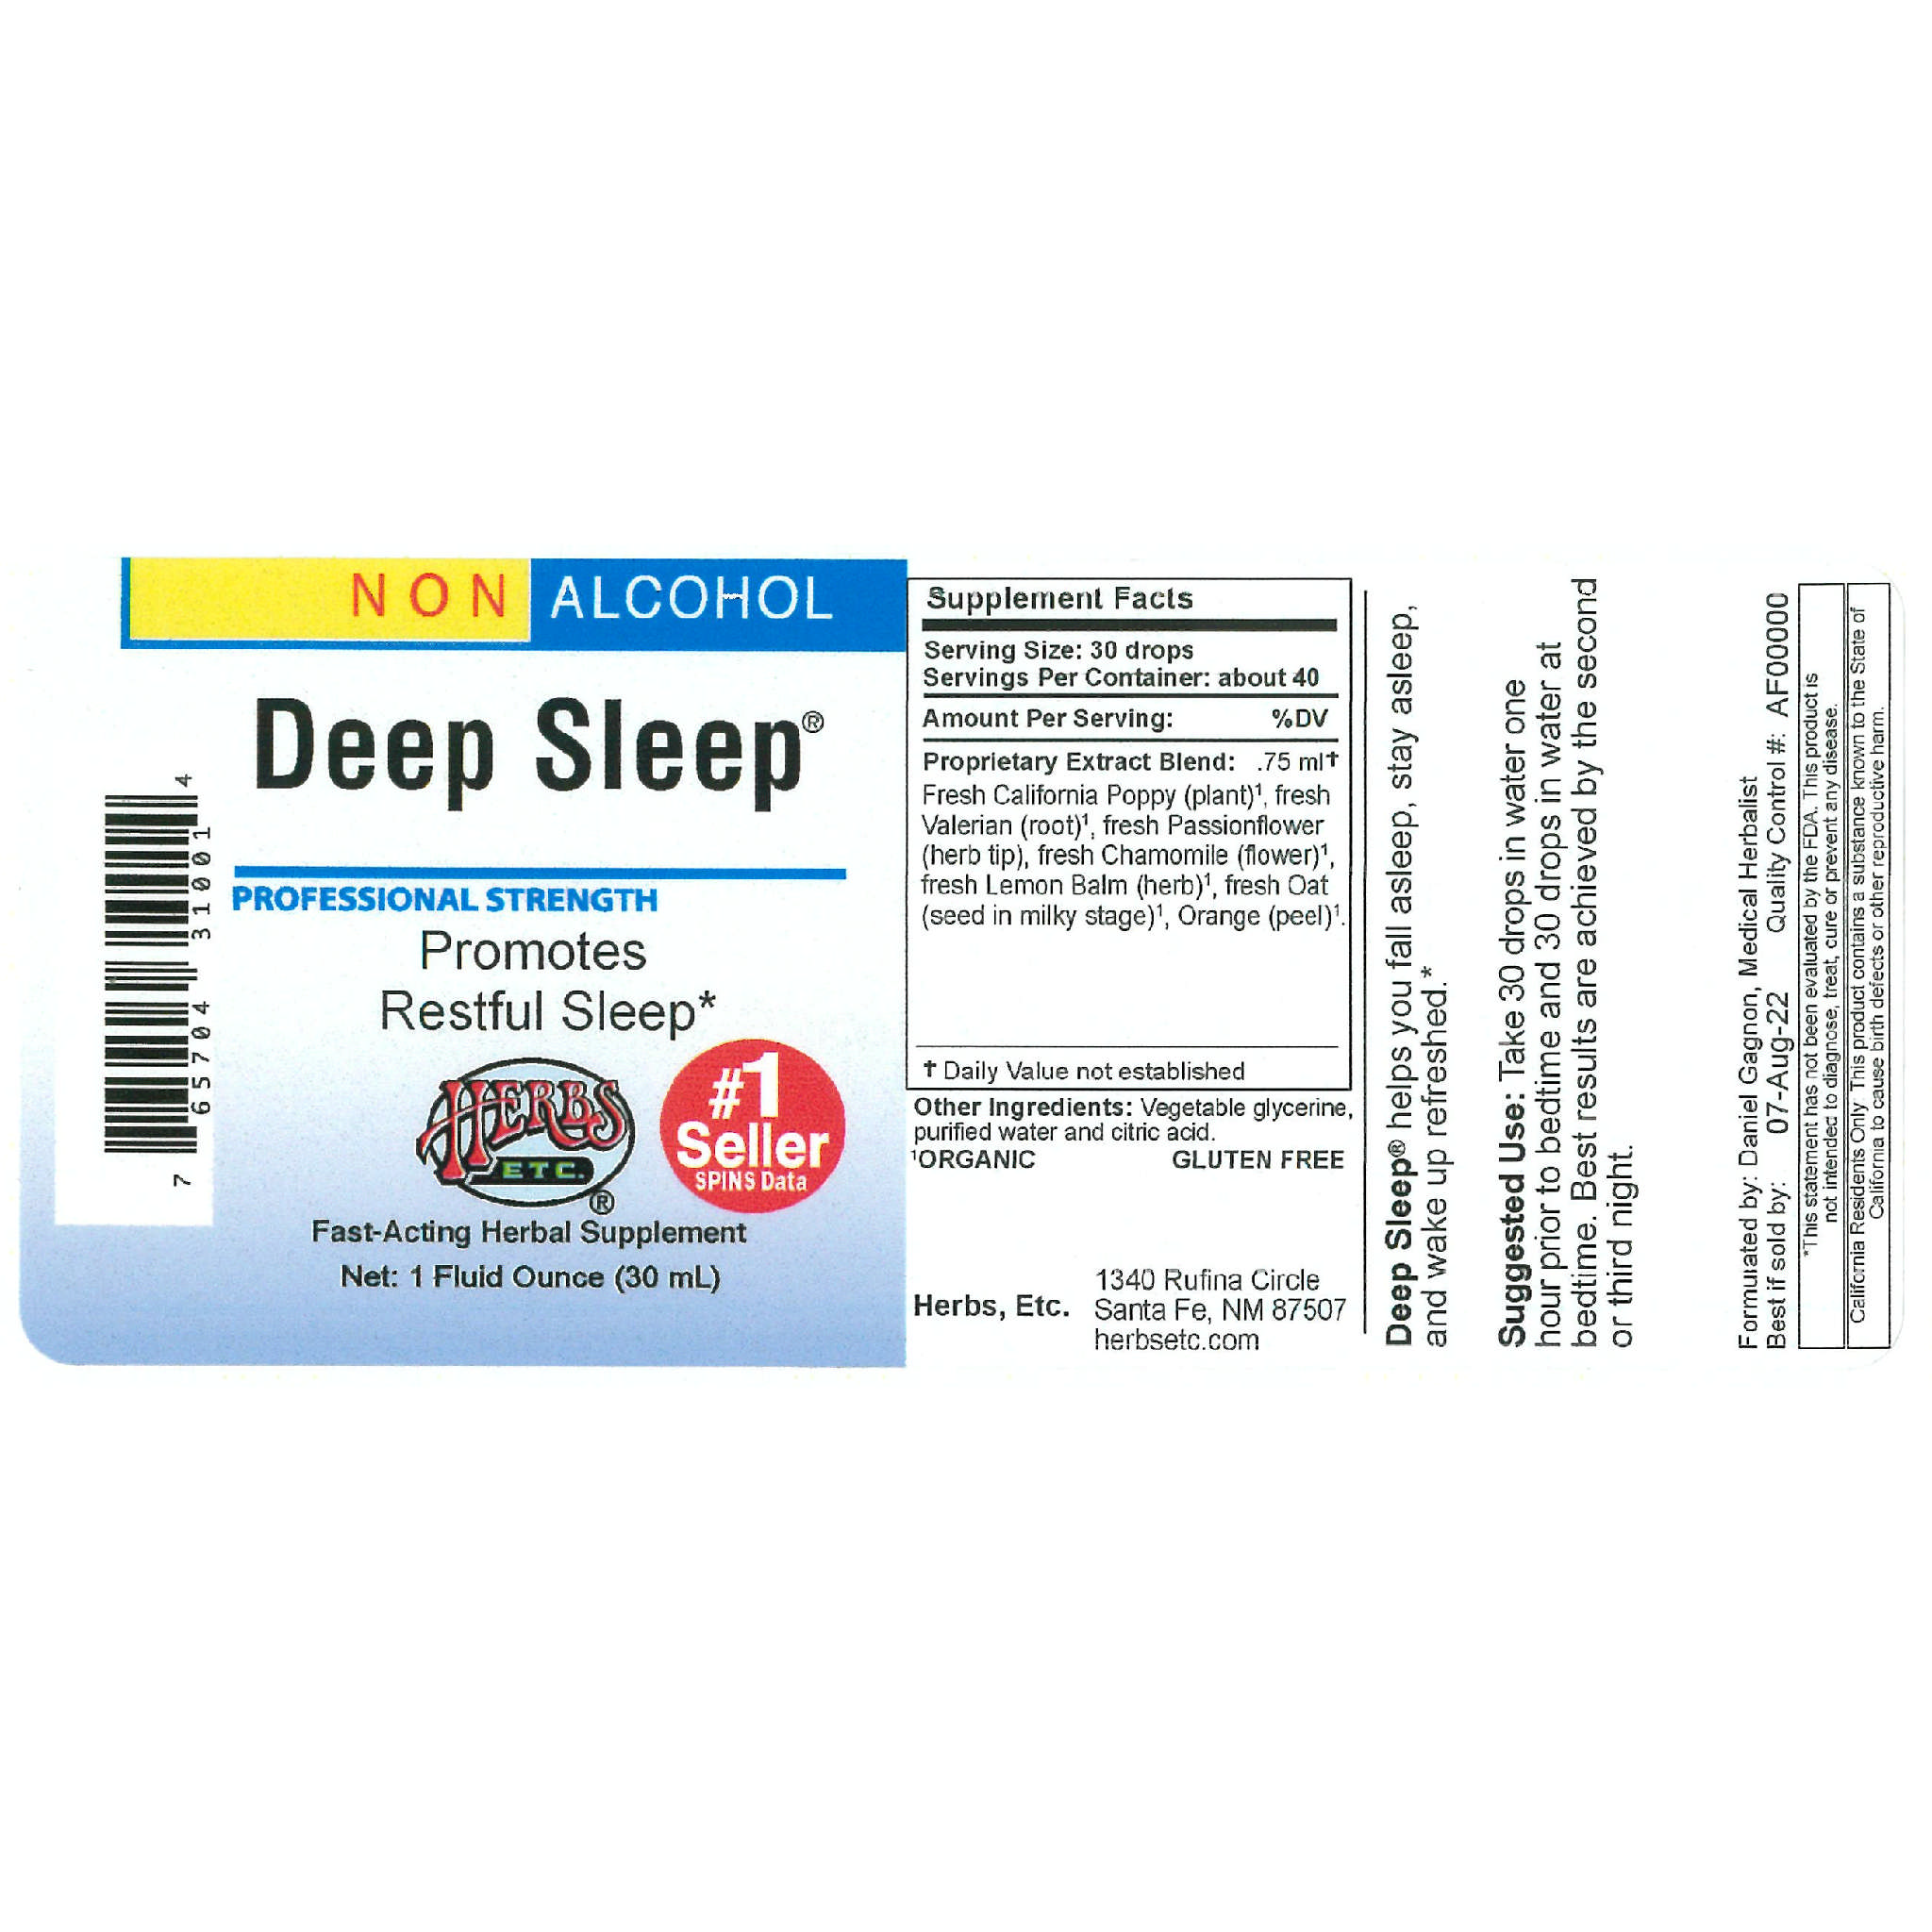 Herbs Etc - Deep Sleep A/F